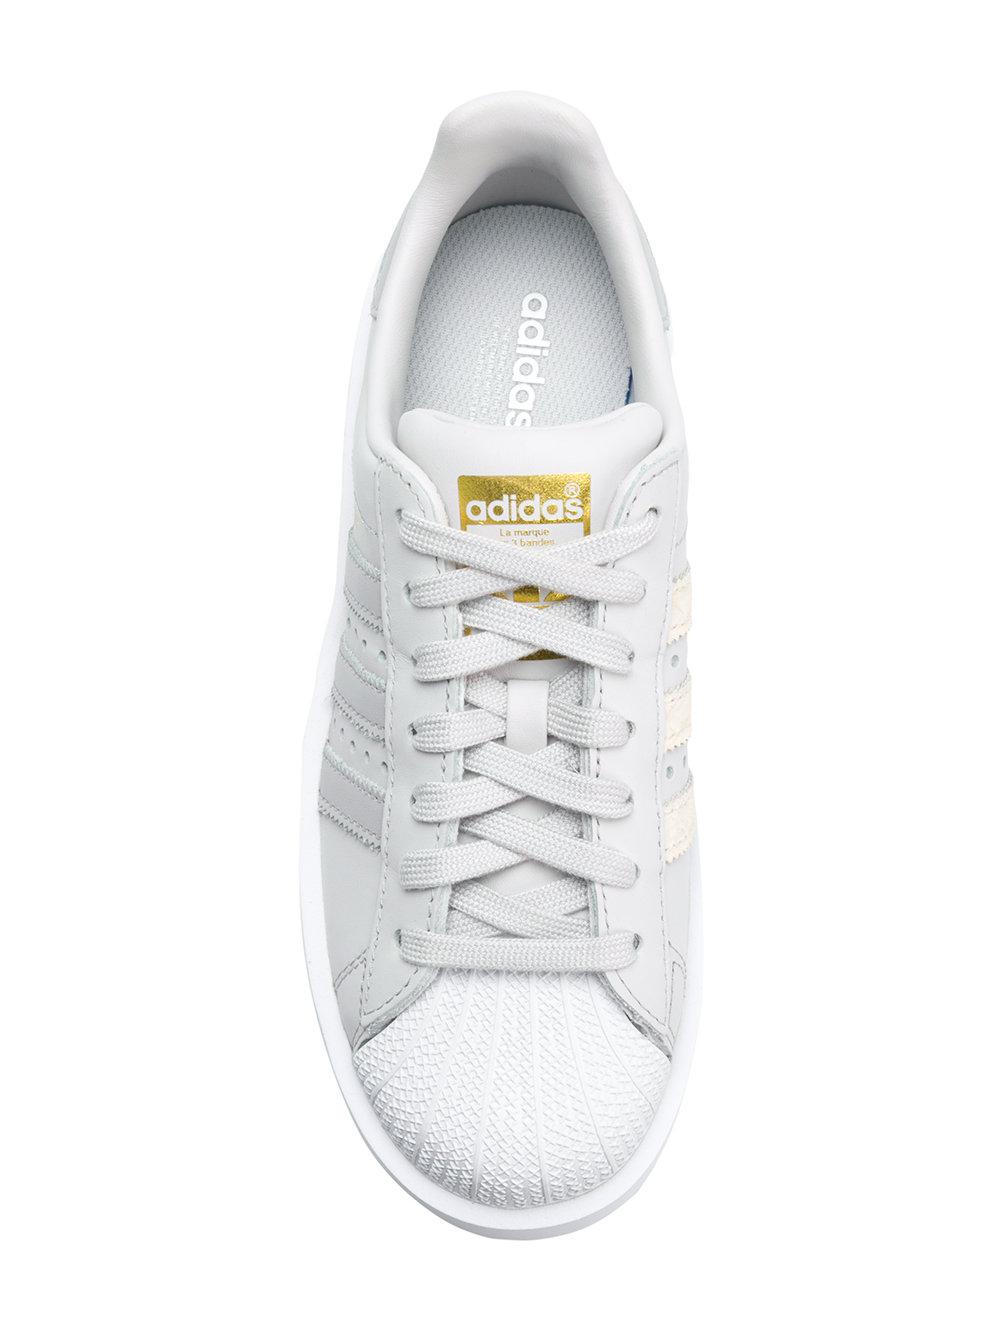 adidas Superstar Bold Platform Sneakers in White | Lyst